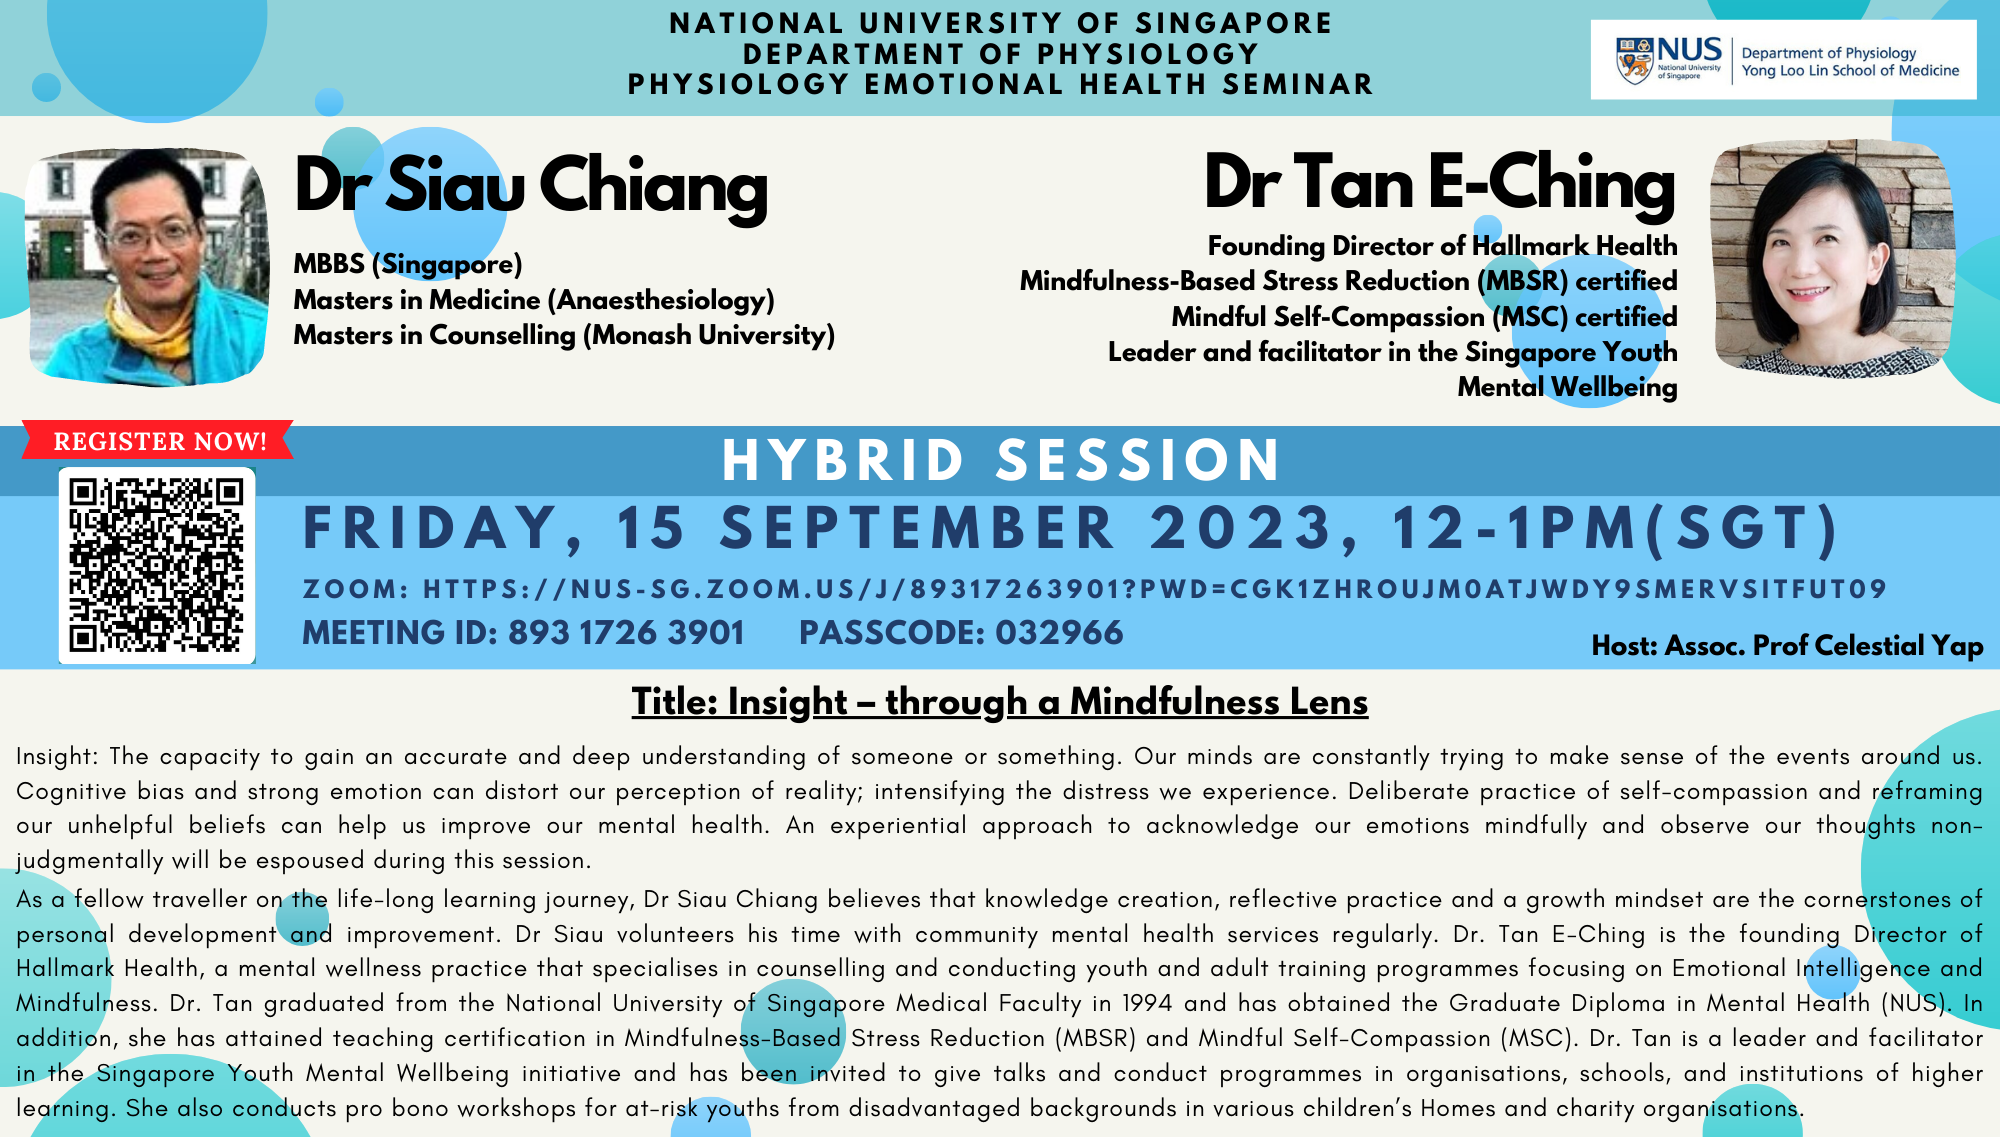 Physiology Emotional Health Seminar 15 September 2023